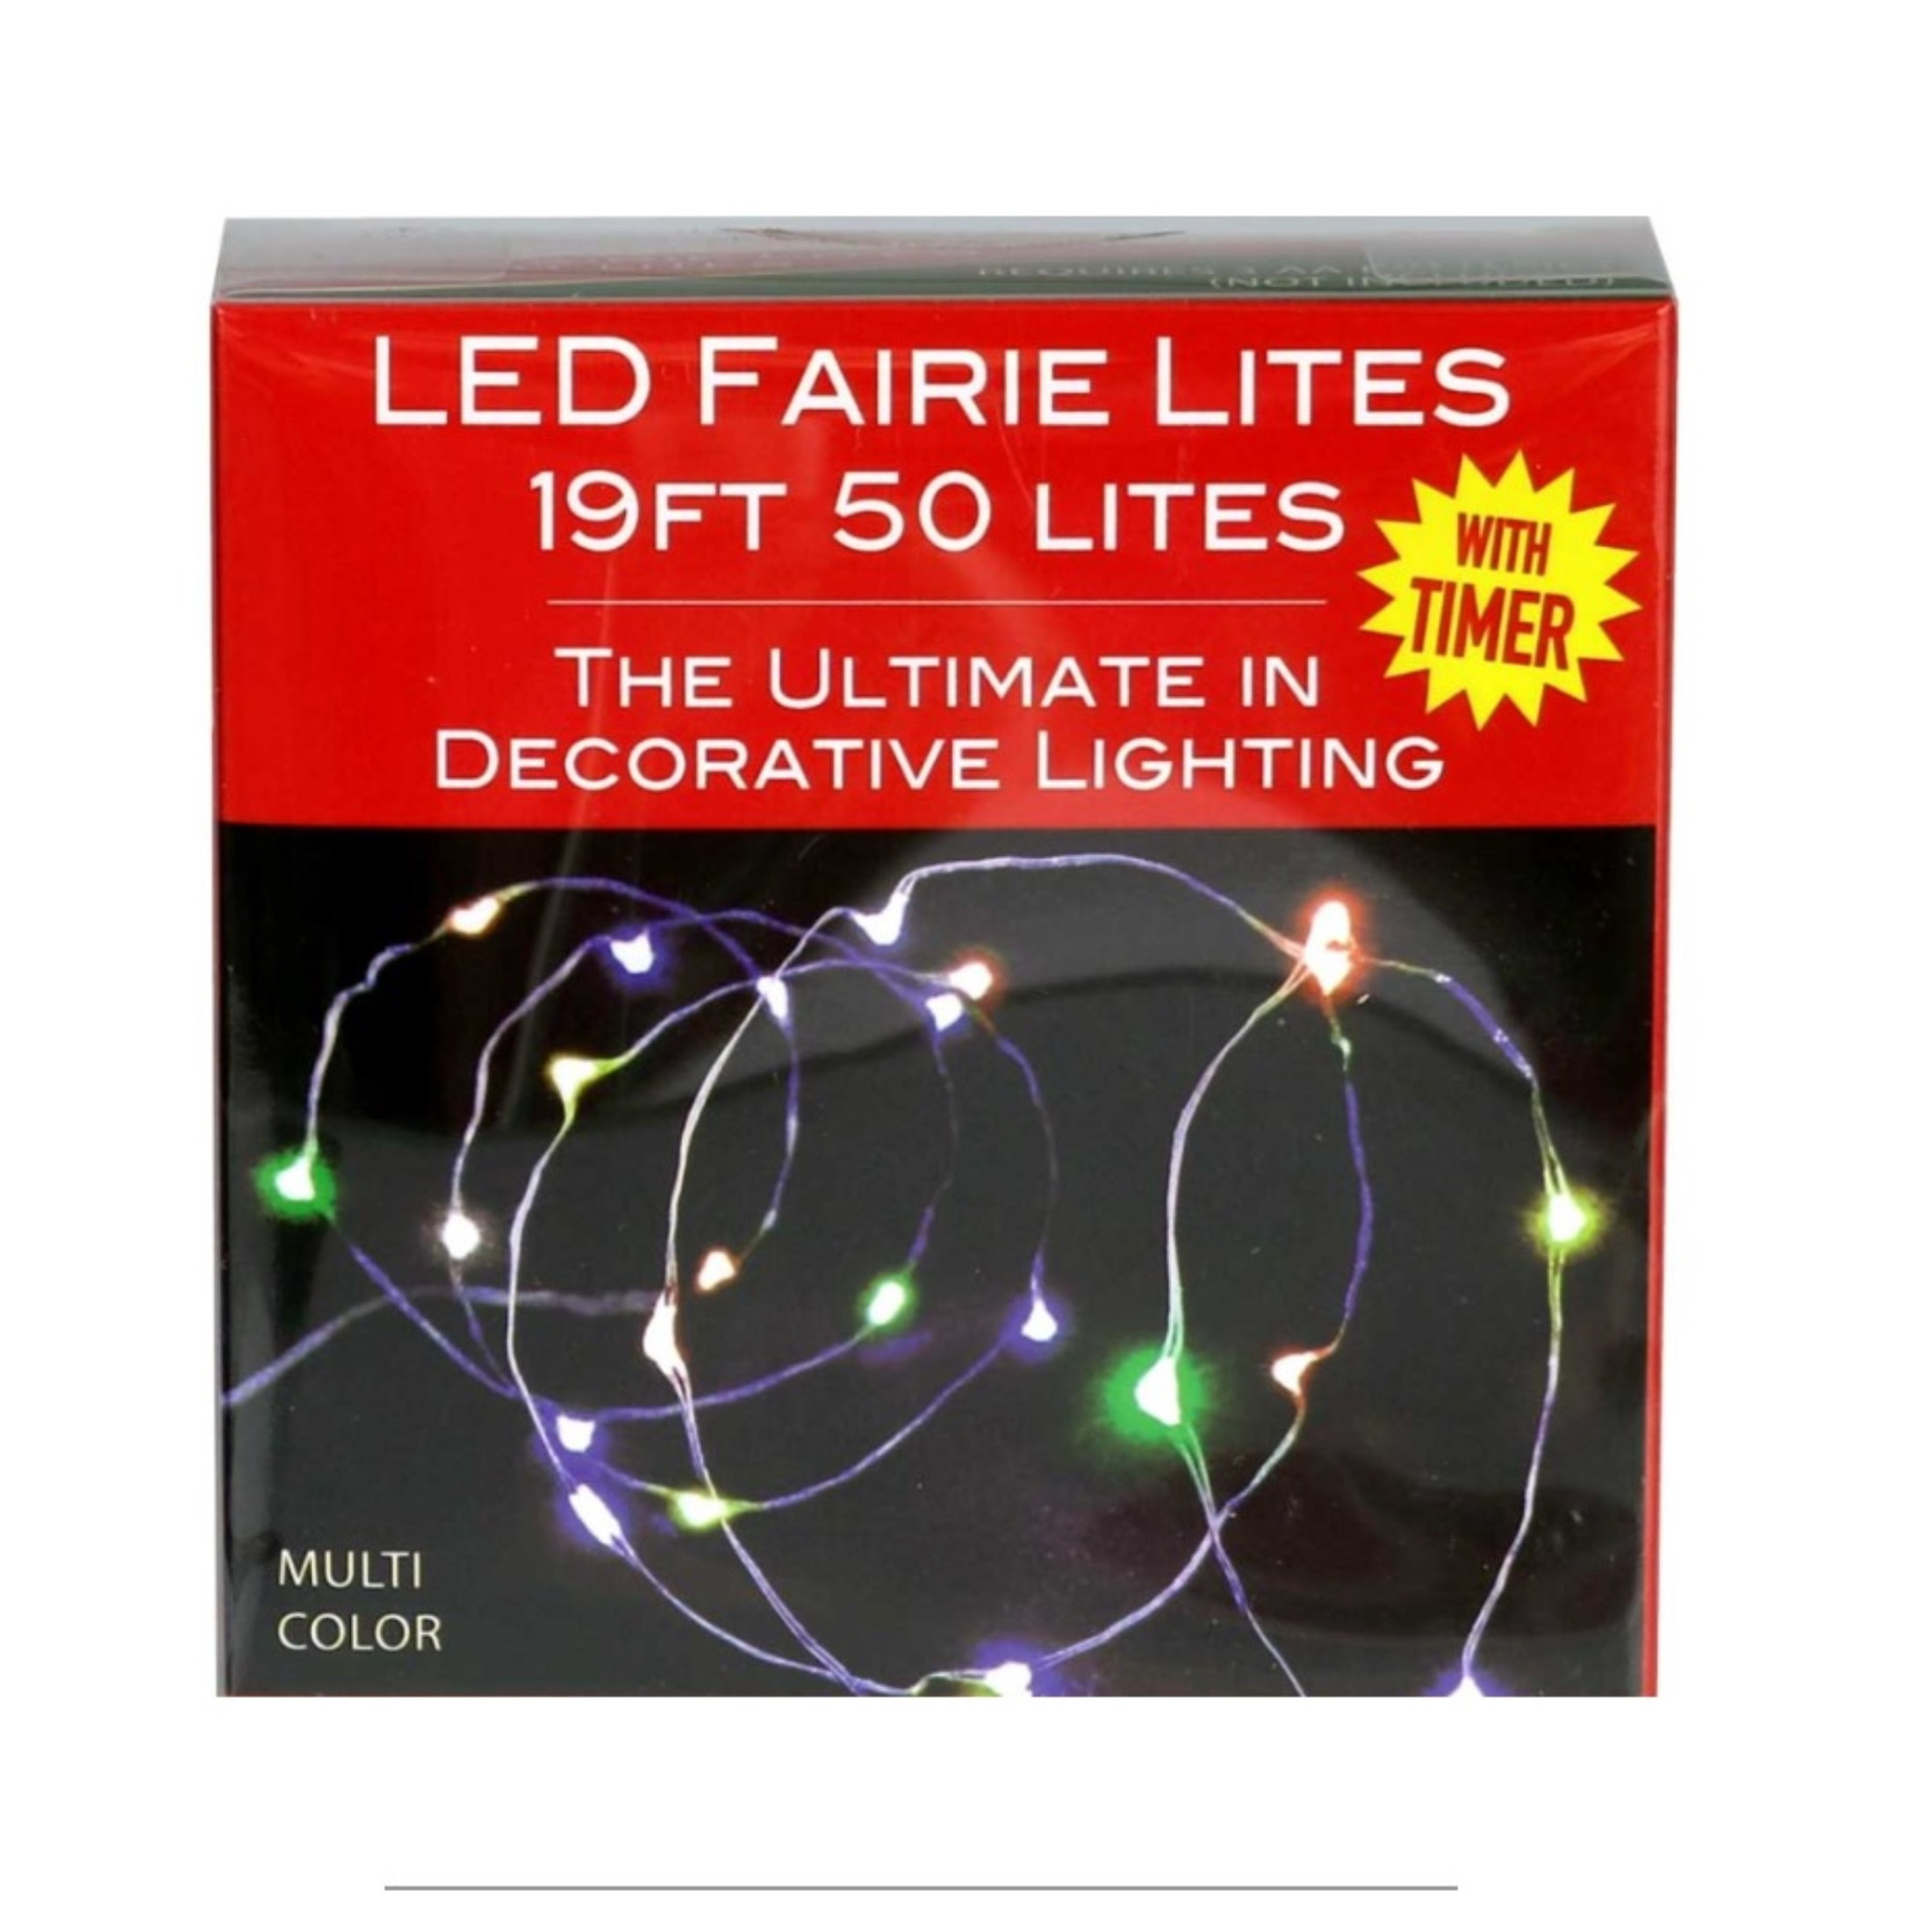 Kurt Adler Battery Operated 50 Multicolored LED Fairy Light Set with Timer 19ft